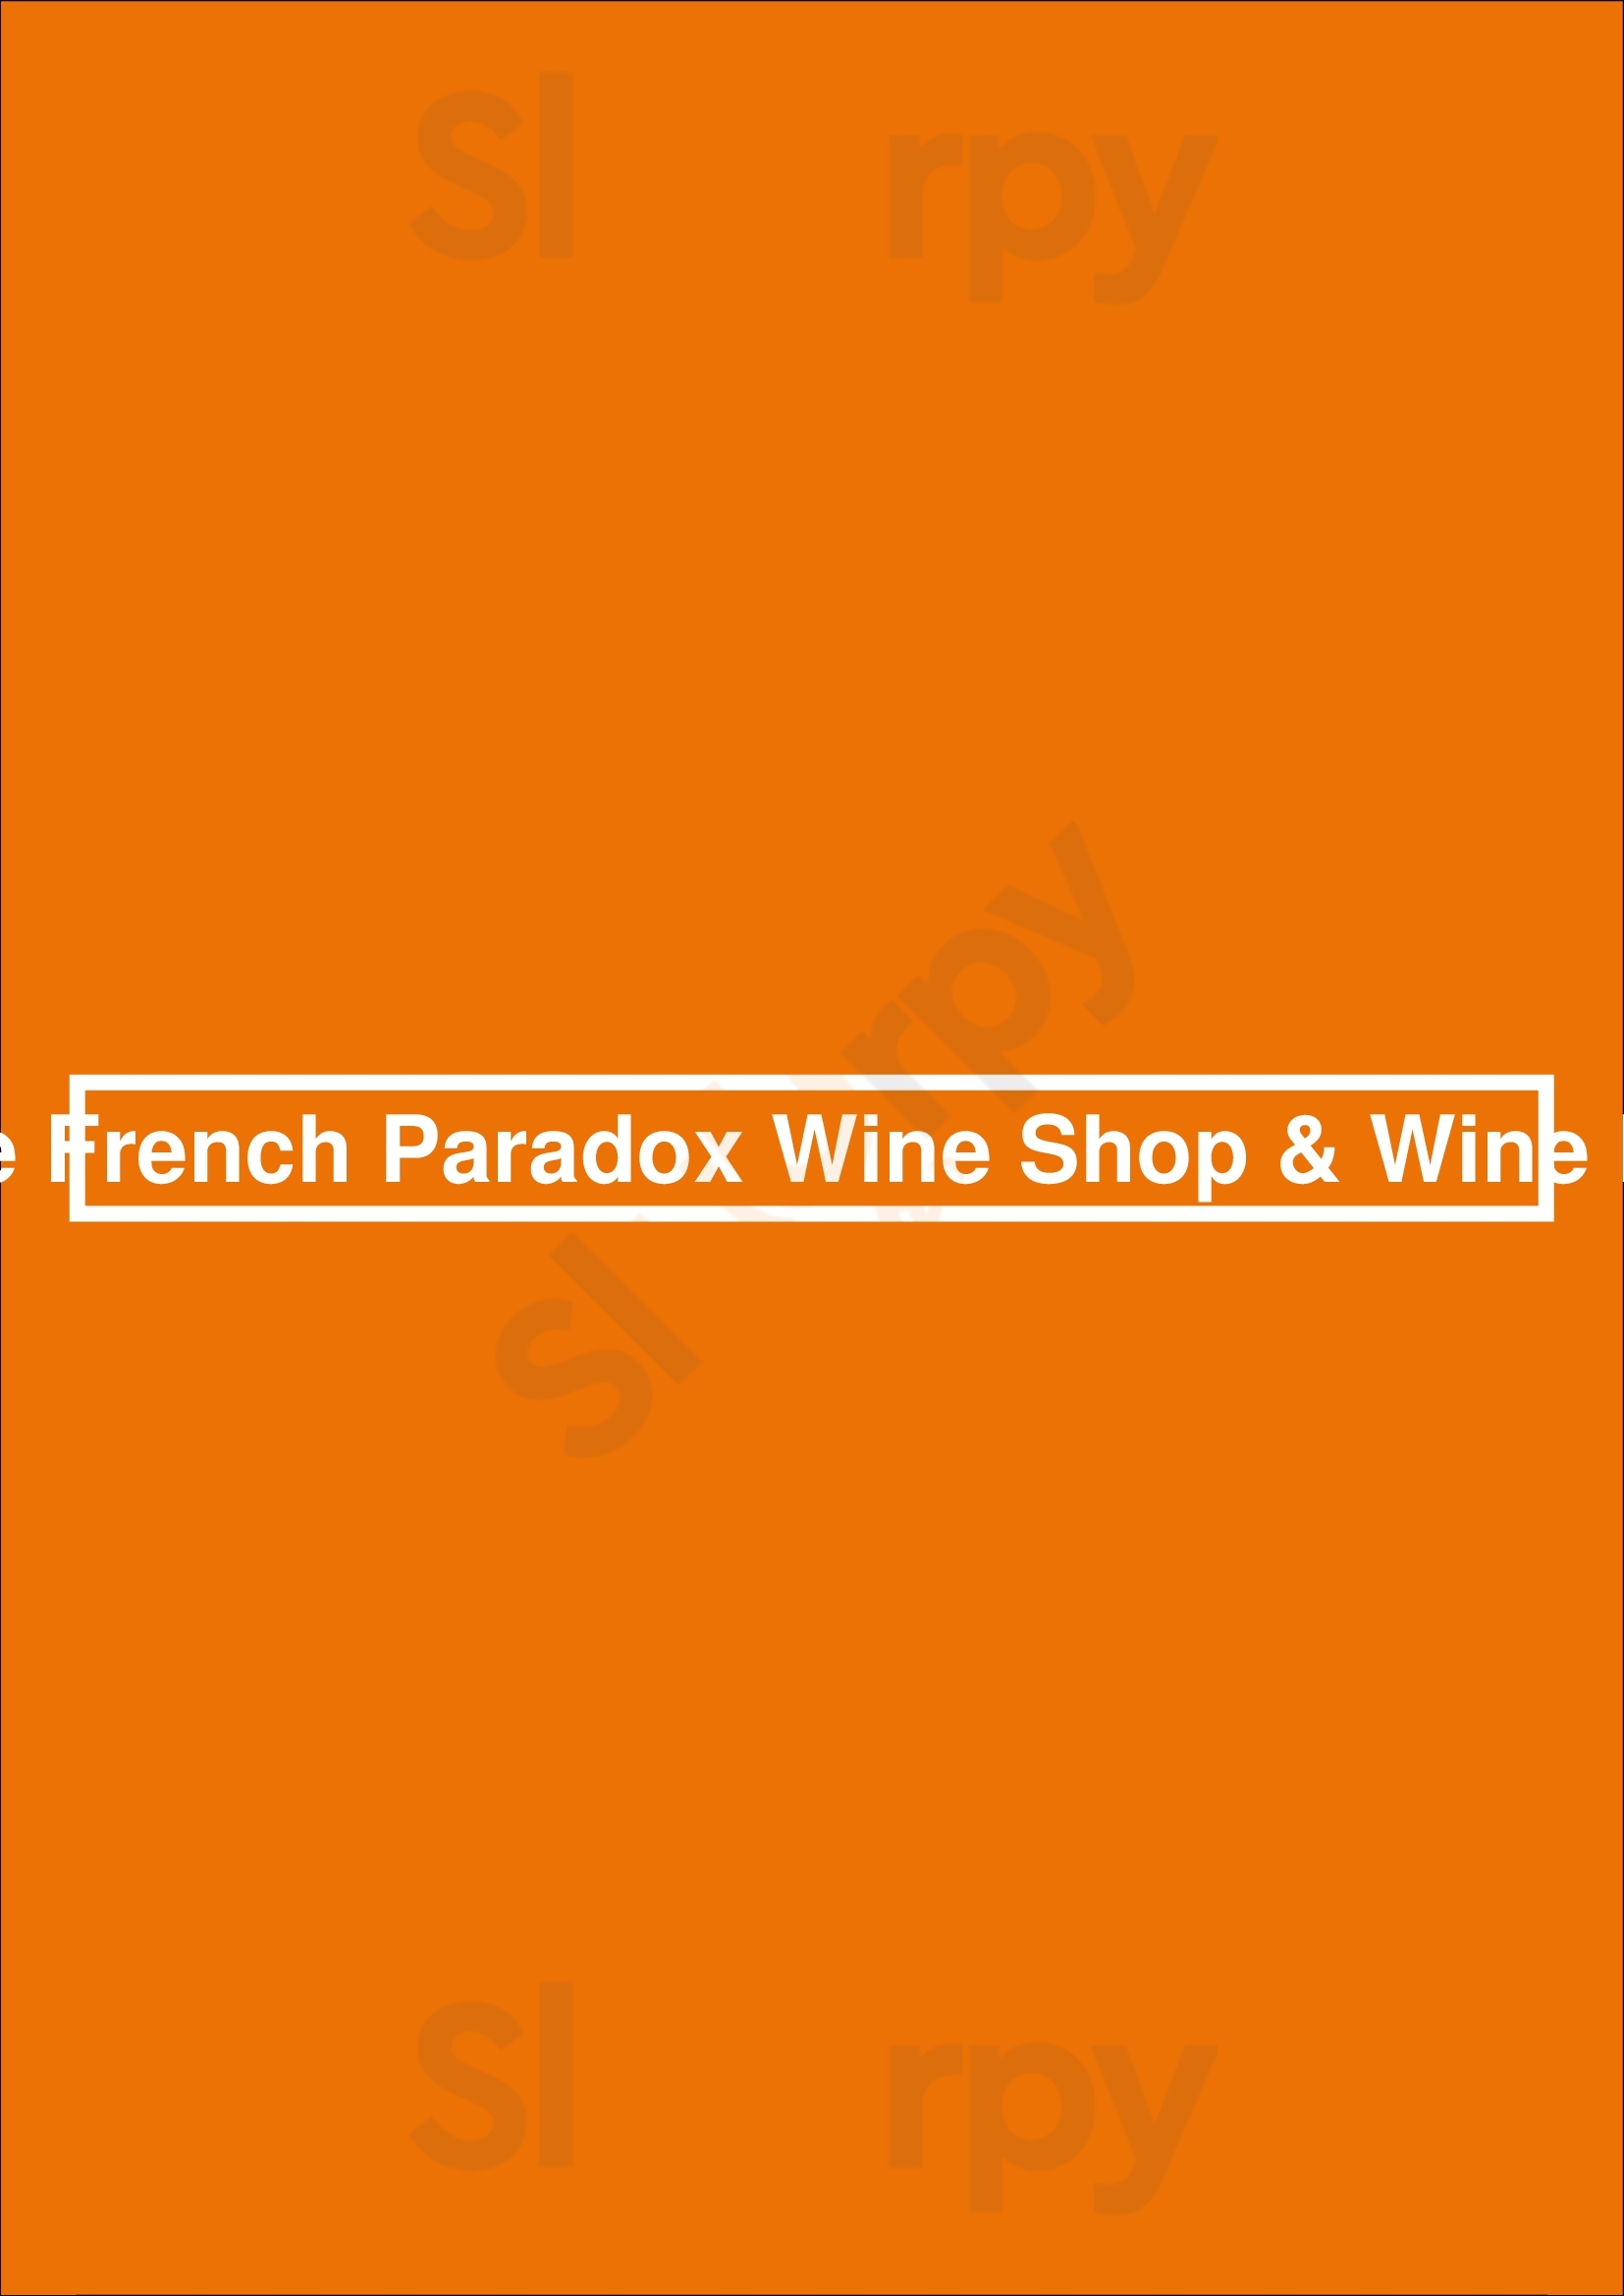 The French Paradox Wine Shop & Tasting Room Dublin Menu - 1